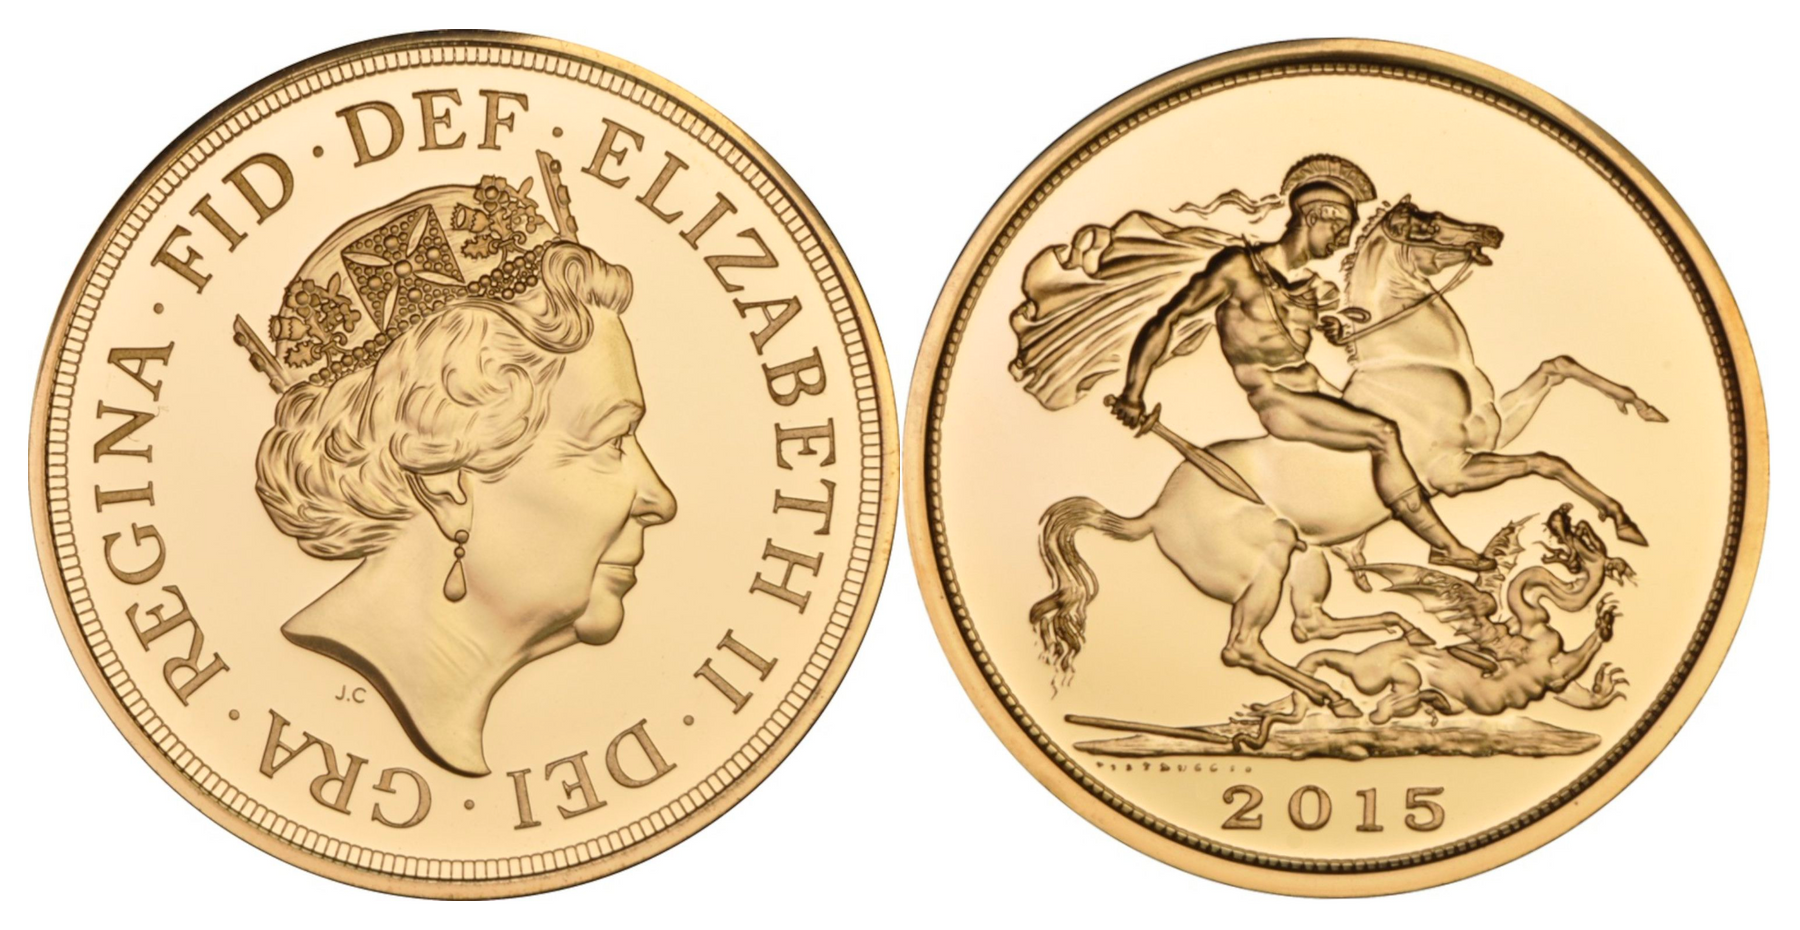 Gold Coins of Elizabeth II